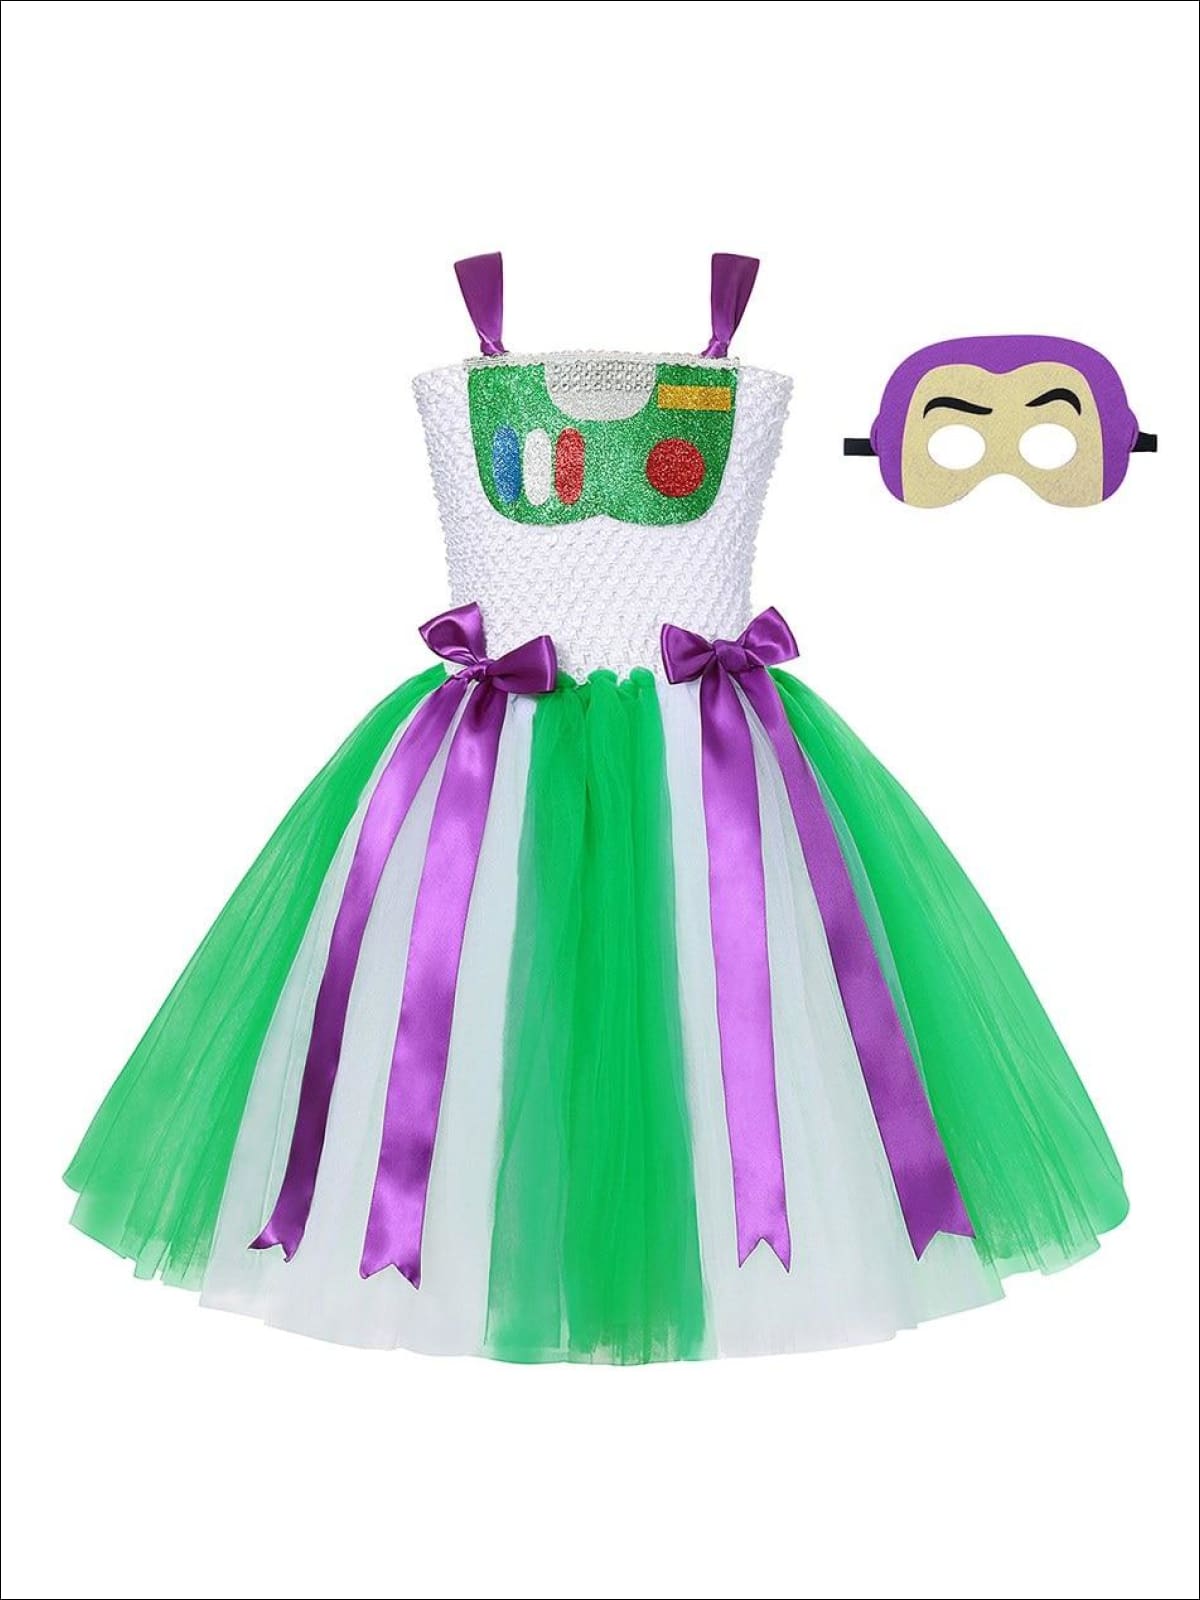 Girls Toy Story 4 Inspired Buzz Lightyear Tutu Halloween Costume - Girls Halloween Costume